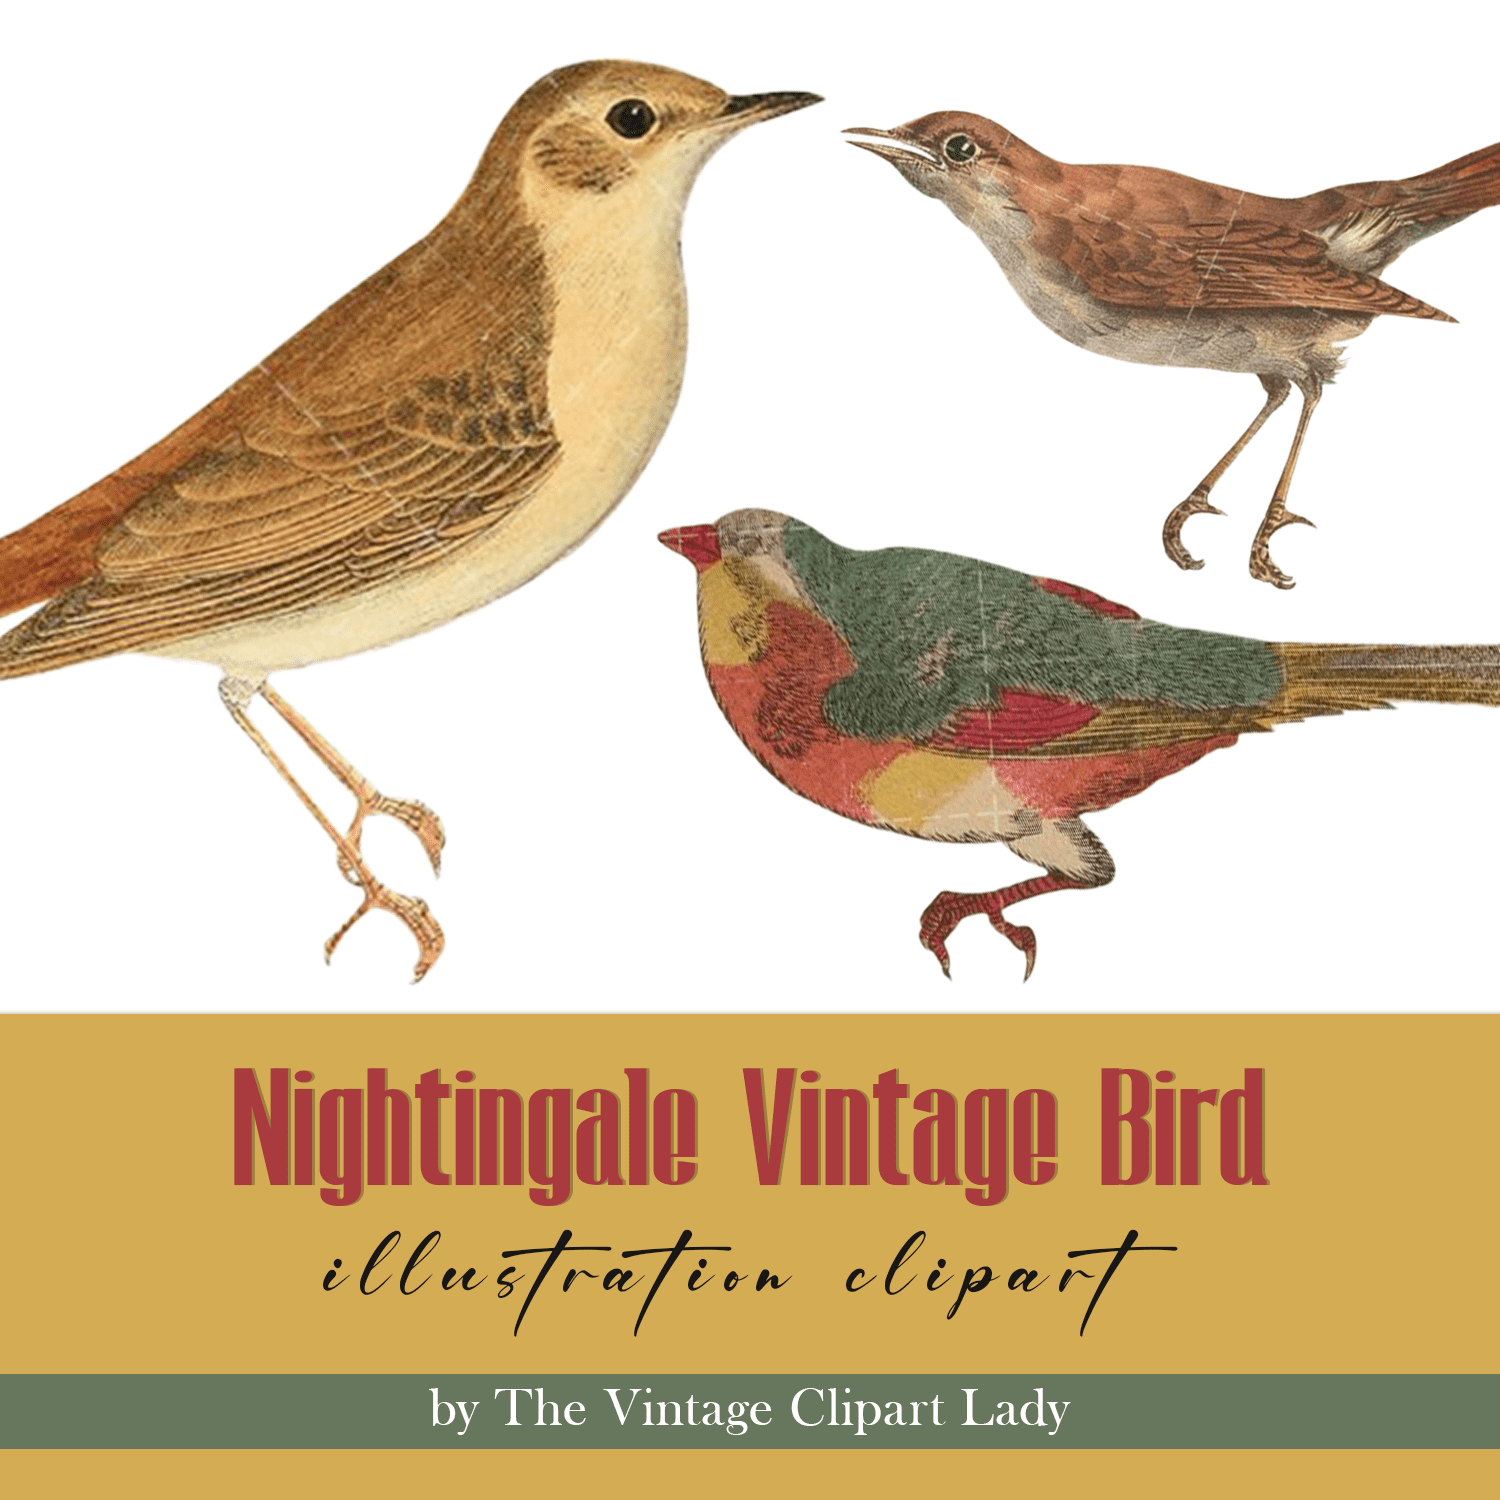 Nightingale Vintage Bird illustration Clip Art, Clipart cover.